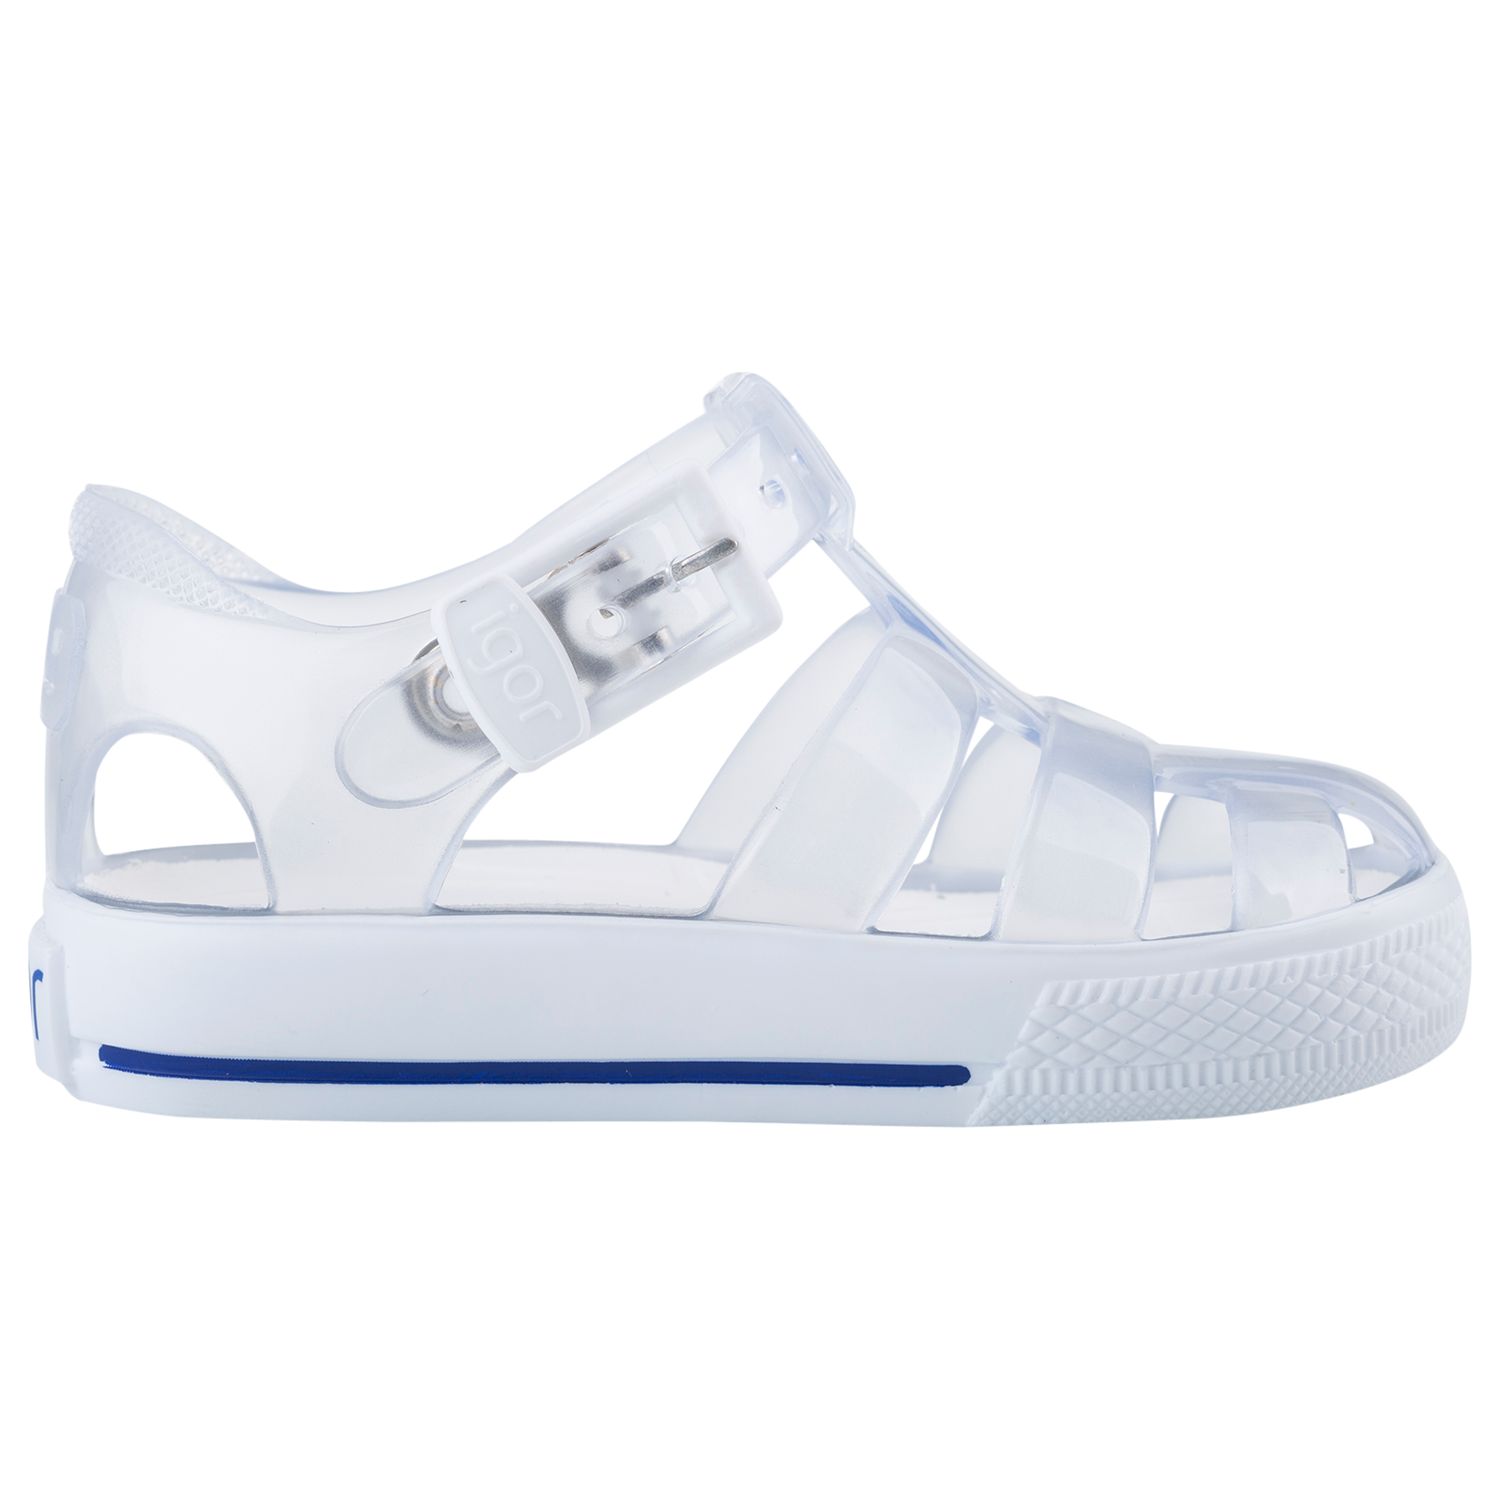 IGOR Children's Tenis Jelly Shoes, White, 21